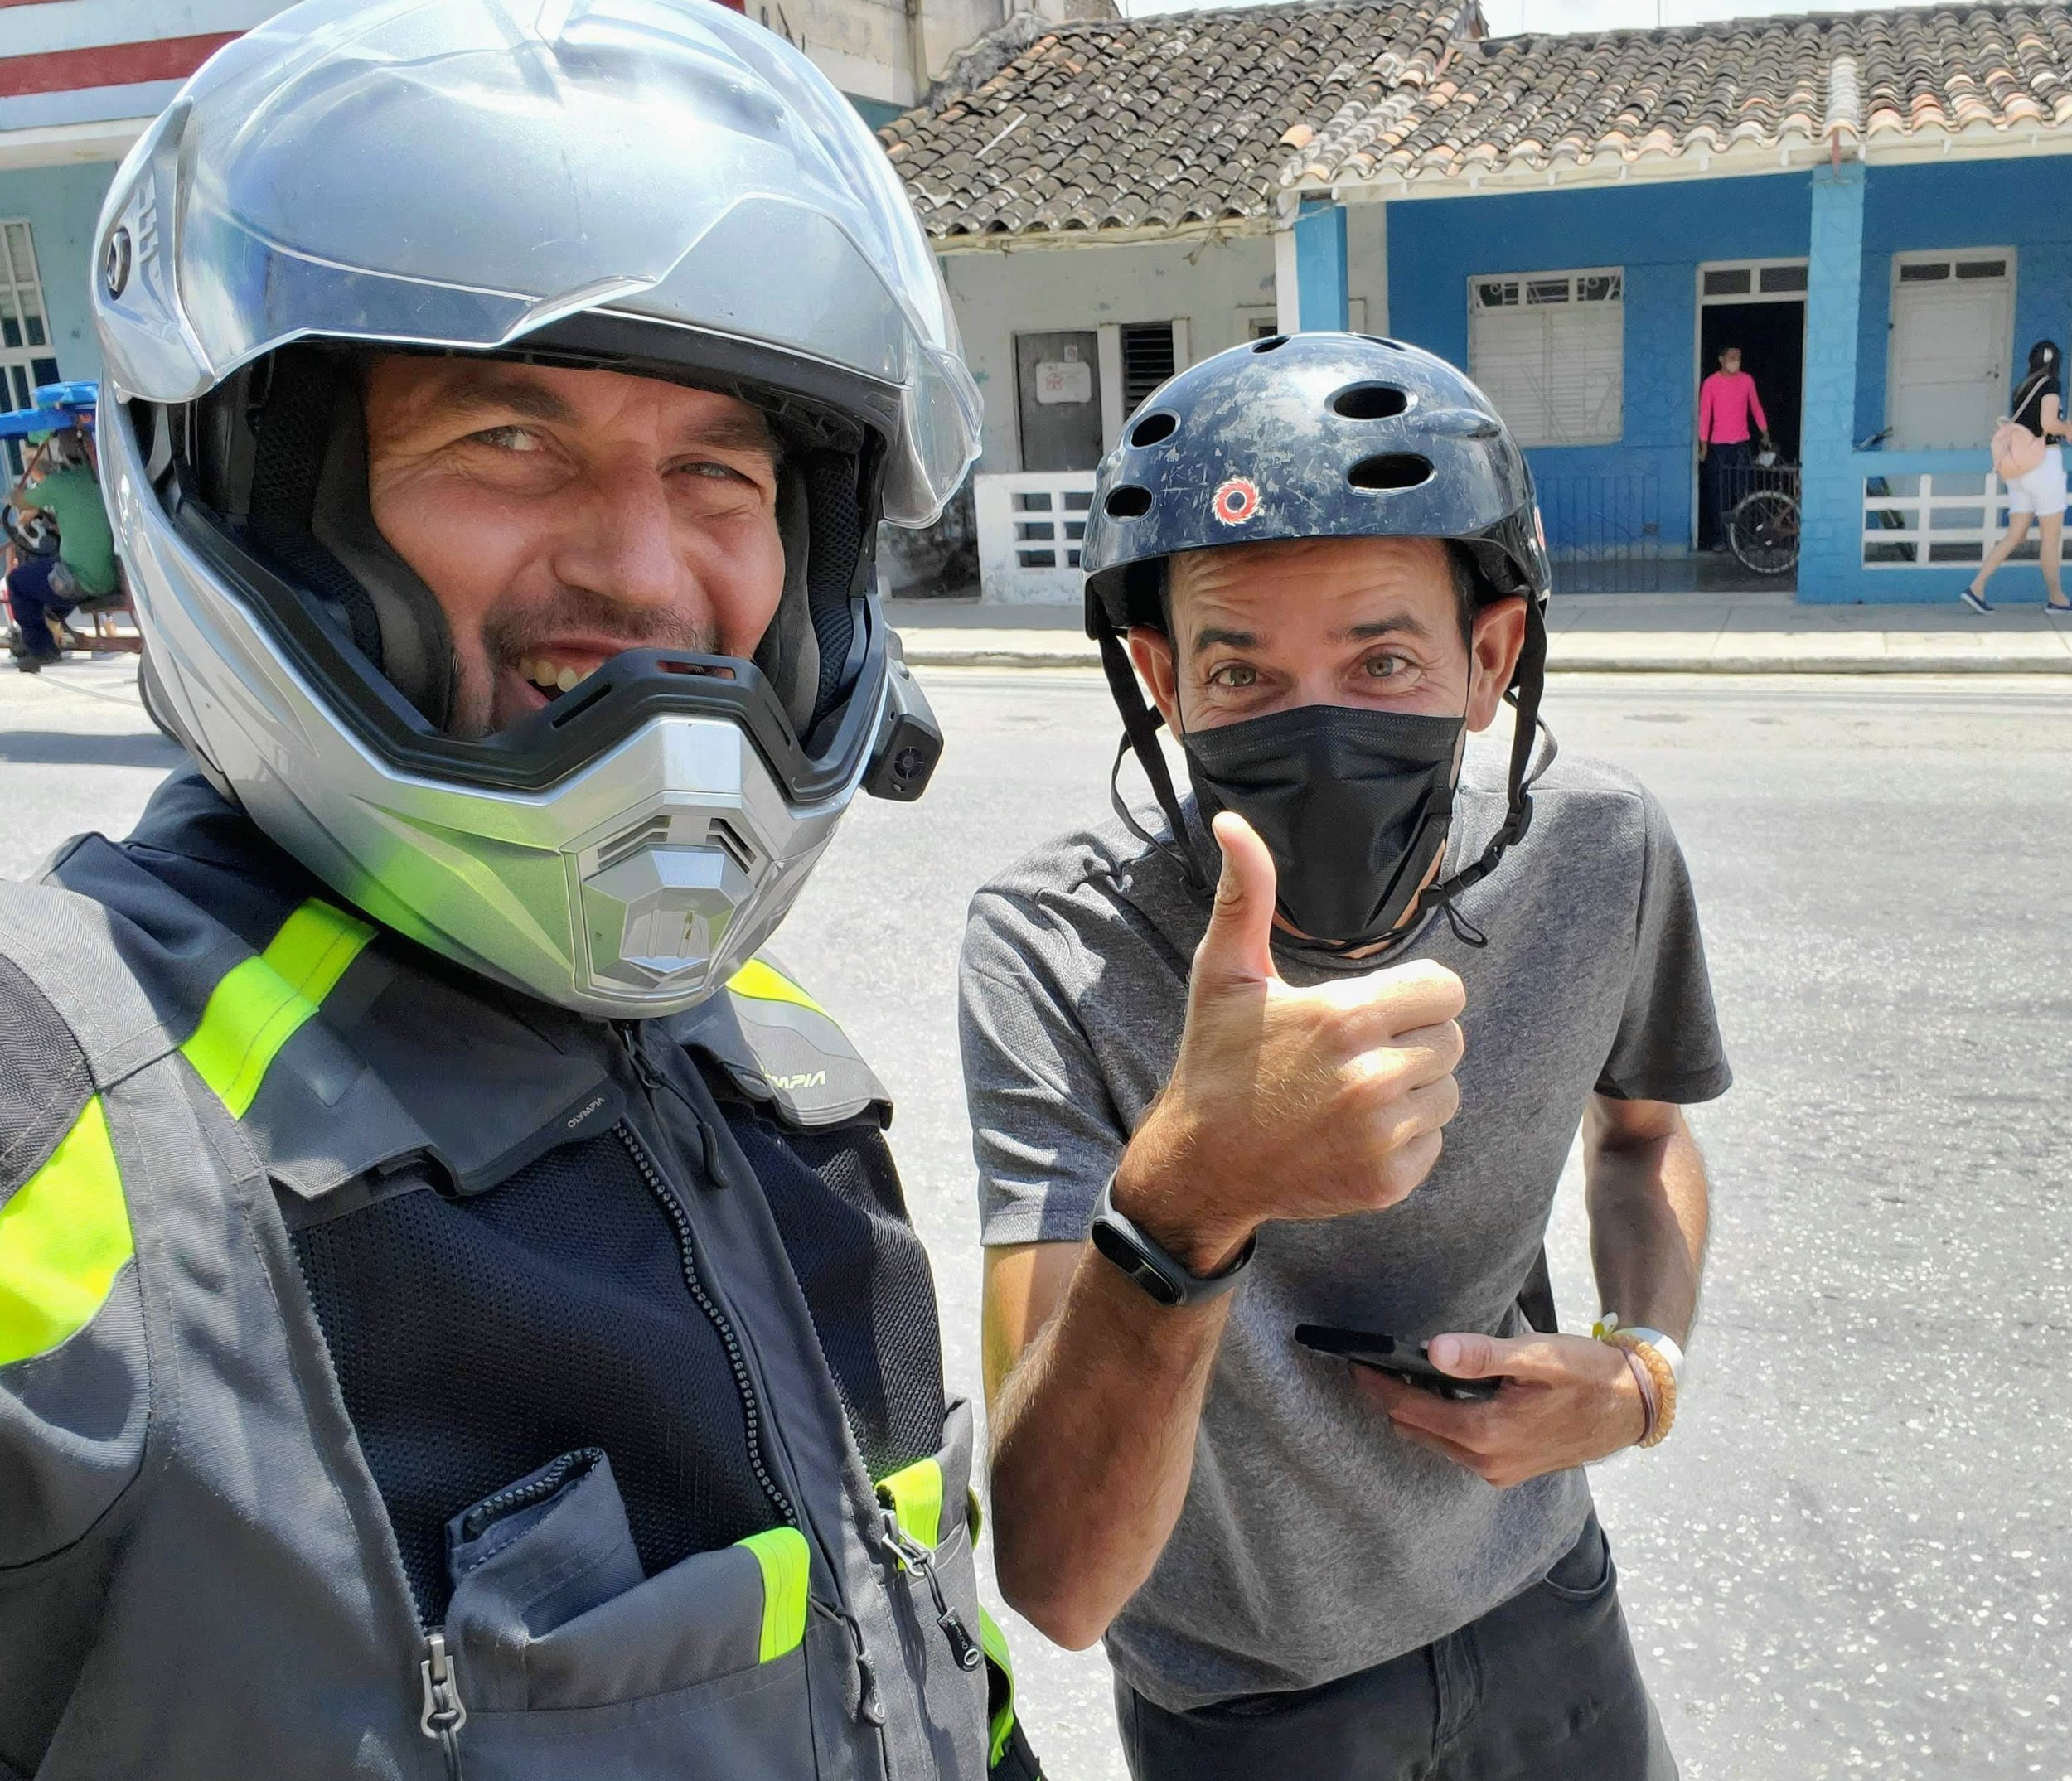 Jamie-Zelazny-Cuba-Stahlratte-Adventure-Rider-Radio-Motorcycle-Podcast-7.jpg